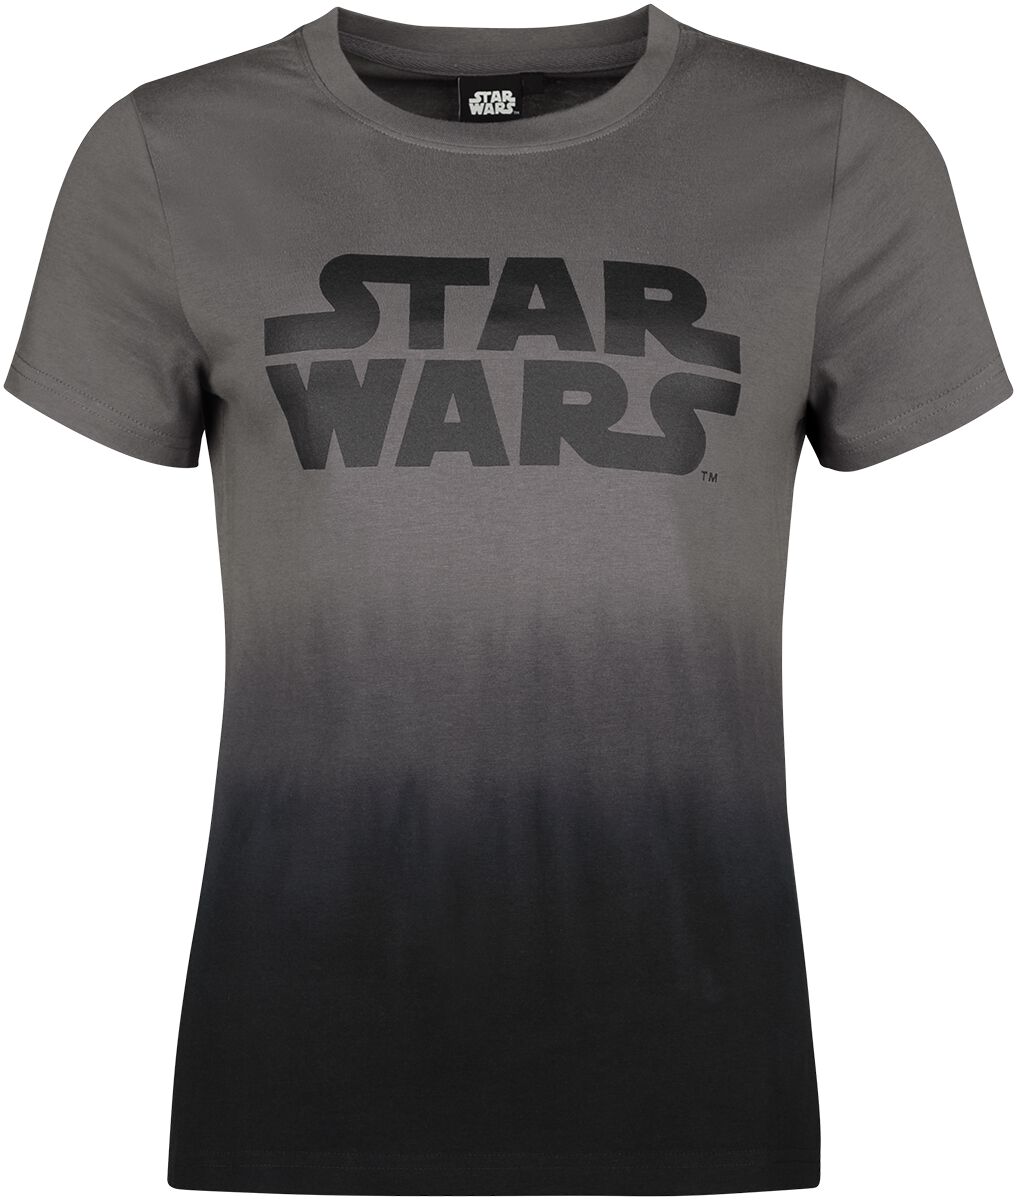 Star Wars Star Wars T-Shirt multicolor in L